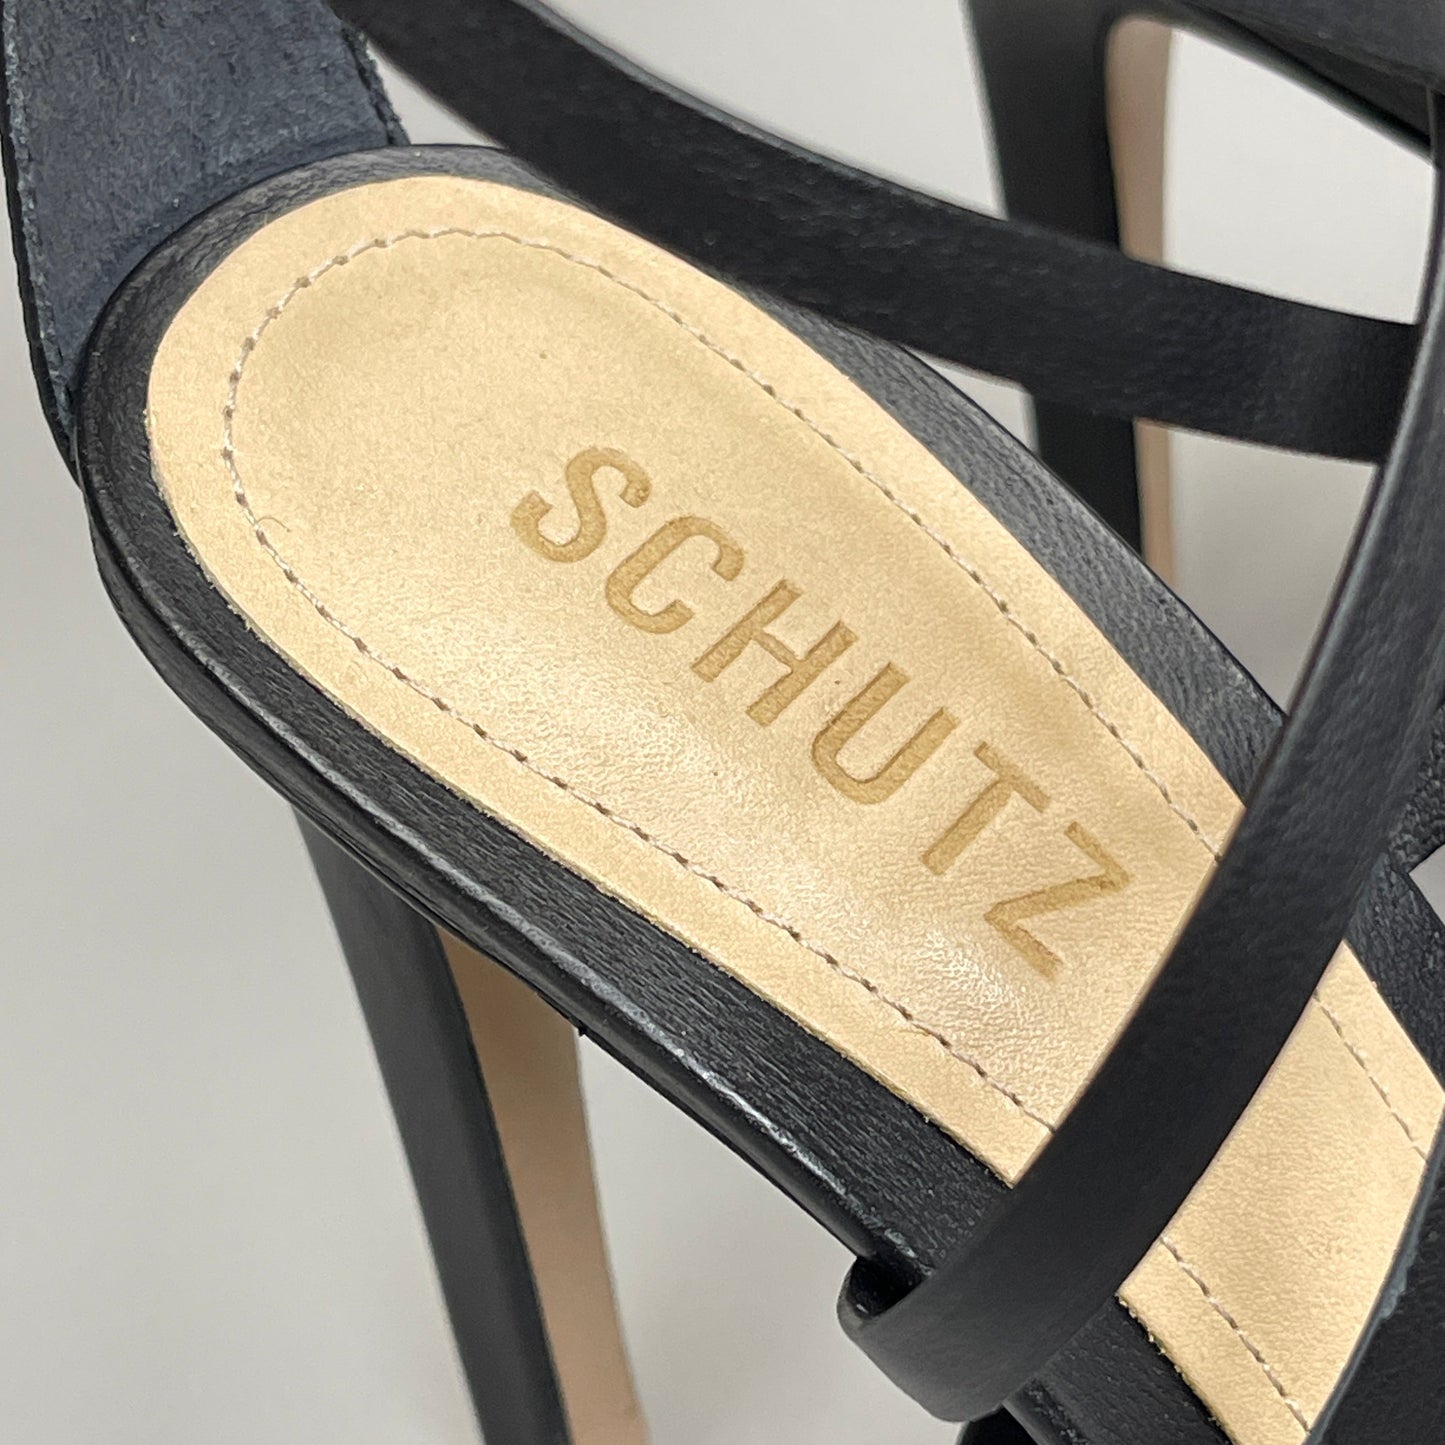 SCHUTZ Bryce Ankle Tie Women's Leather High Heel Strappy Sandal Black Sz 6.5B (New)